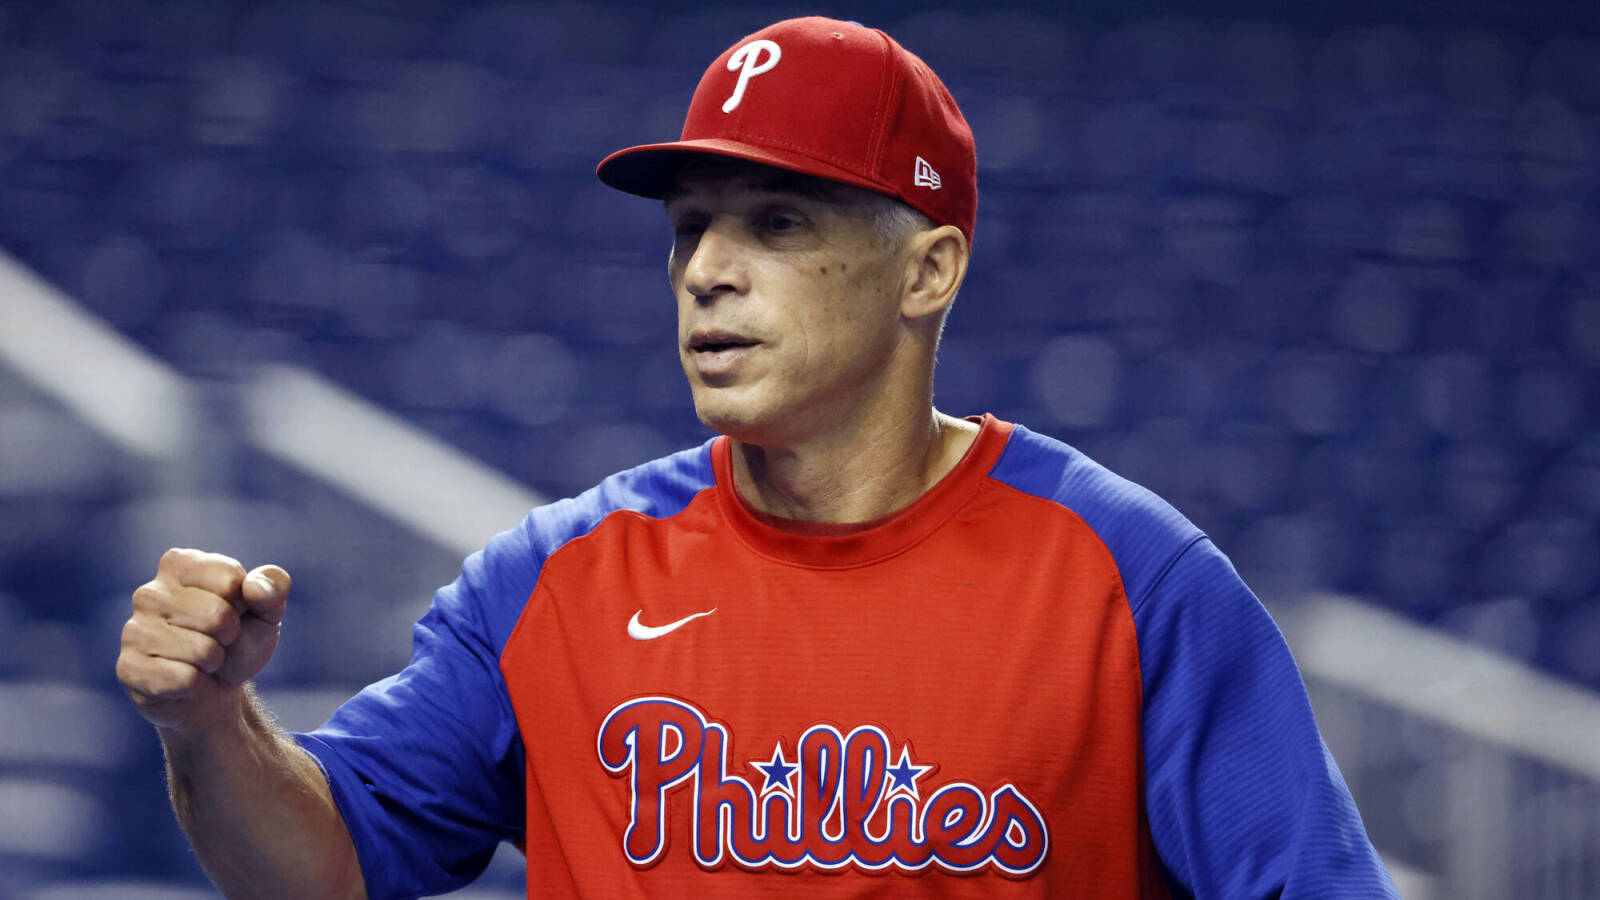 Joe Girardi 'not worried' about job as Phillies continue to falter